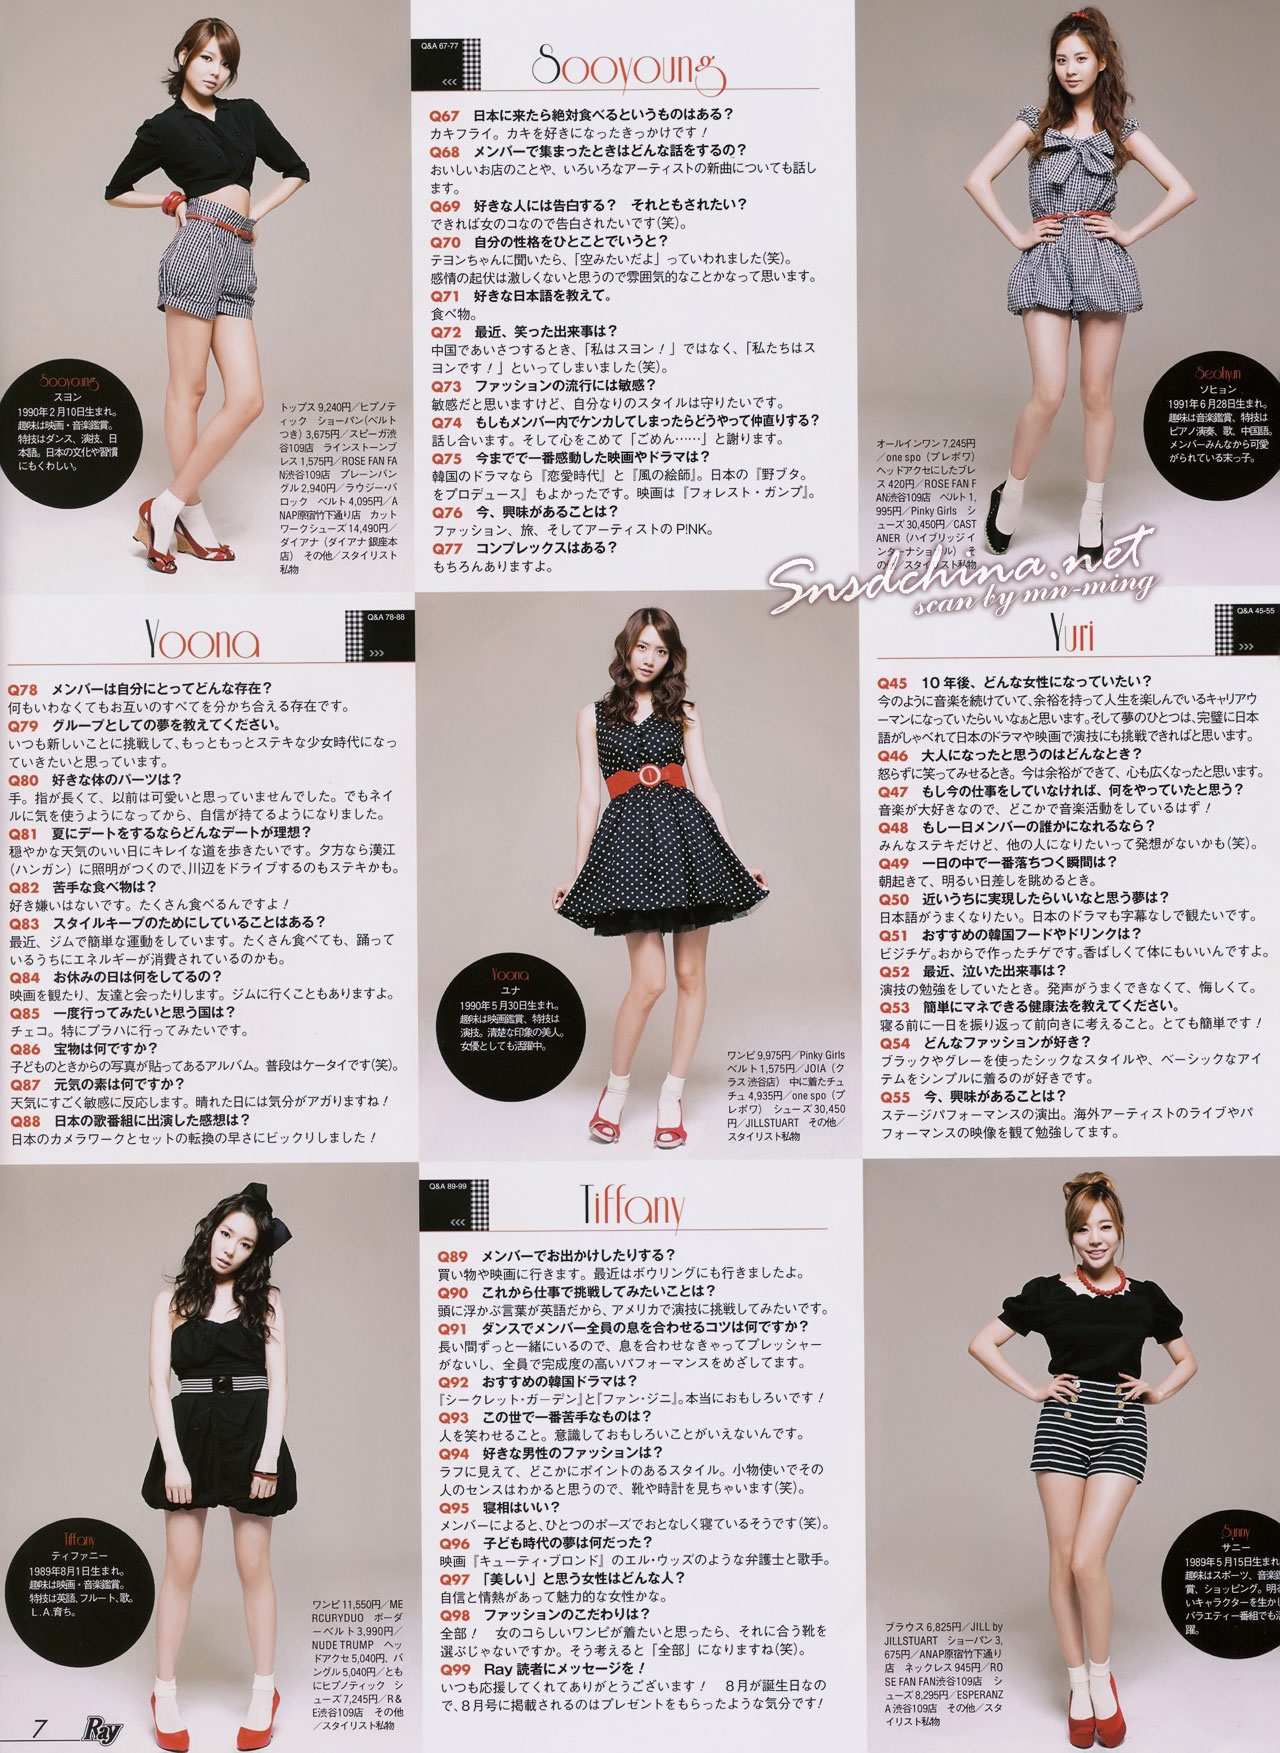 Japan Ray Magazine HQ scan